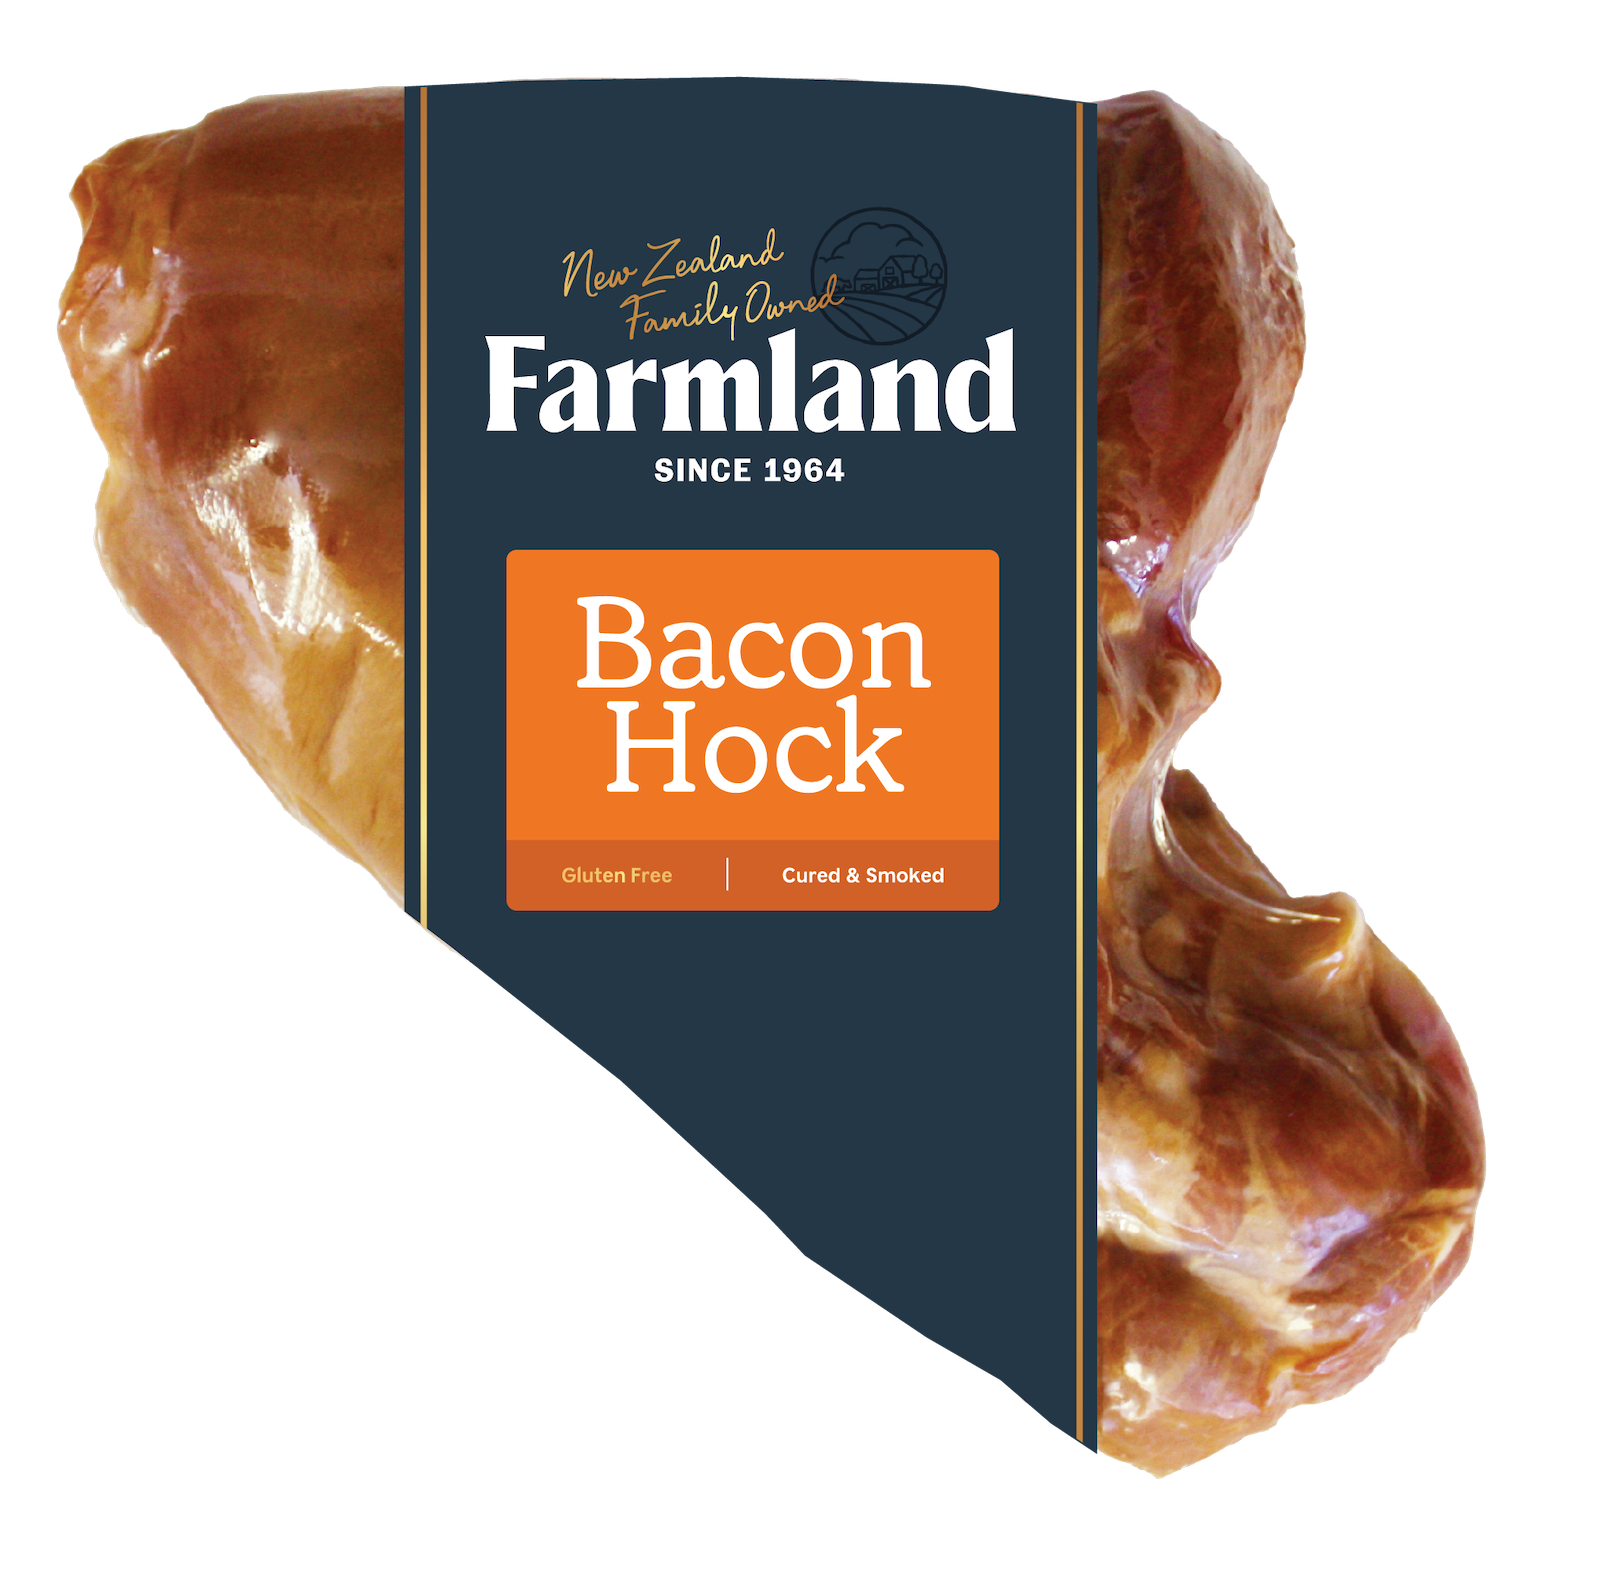 A Farmland Bacon Hock